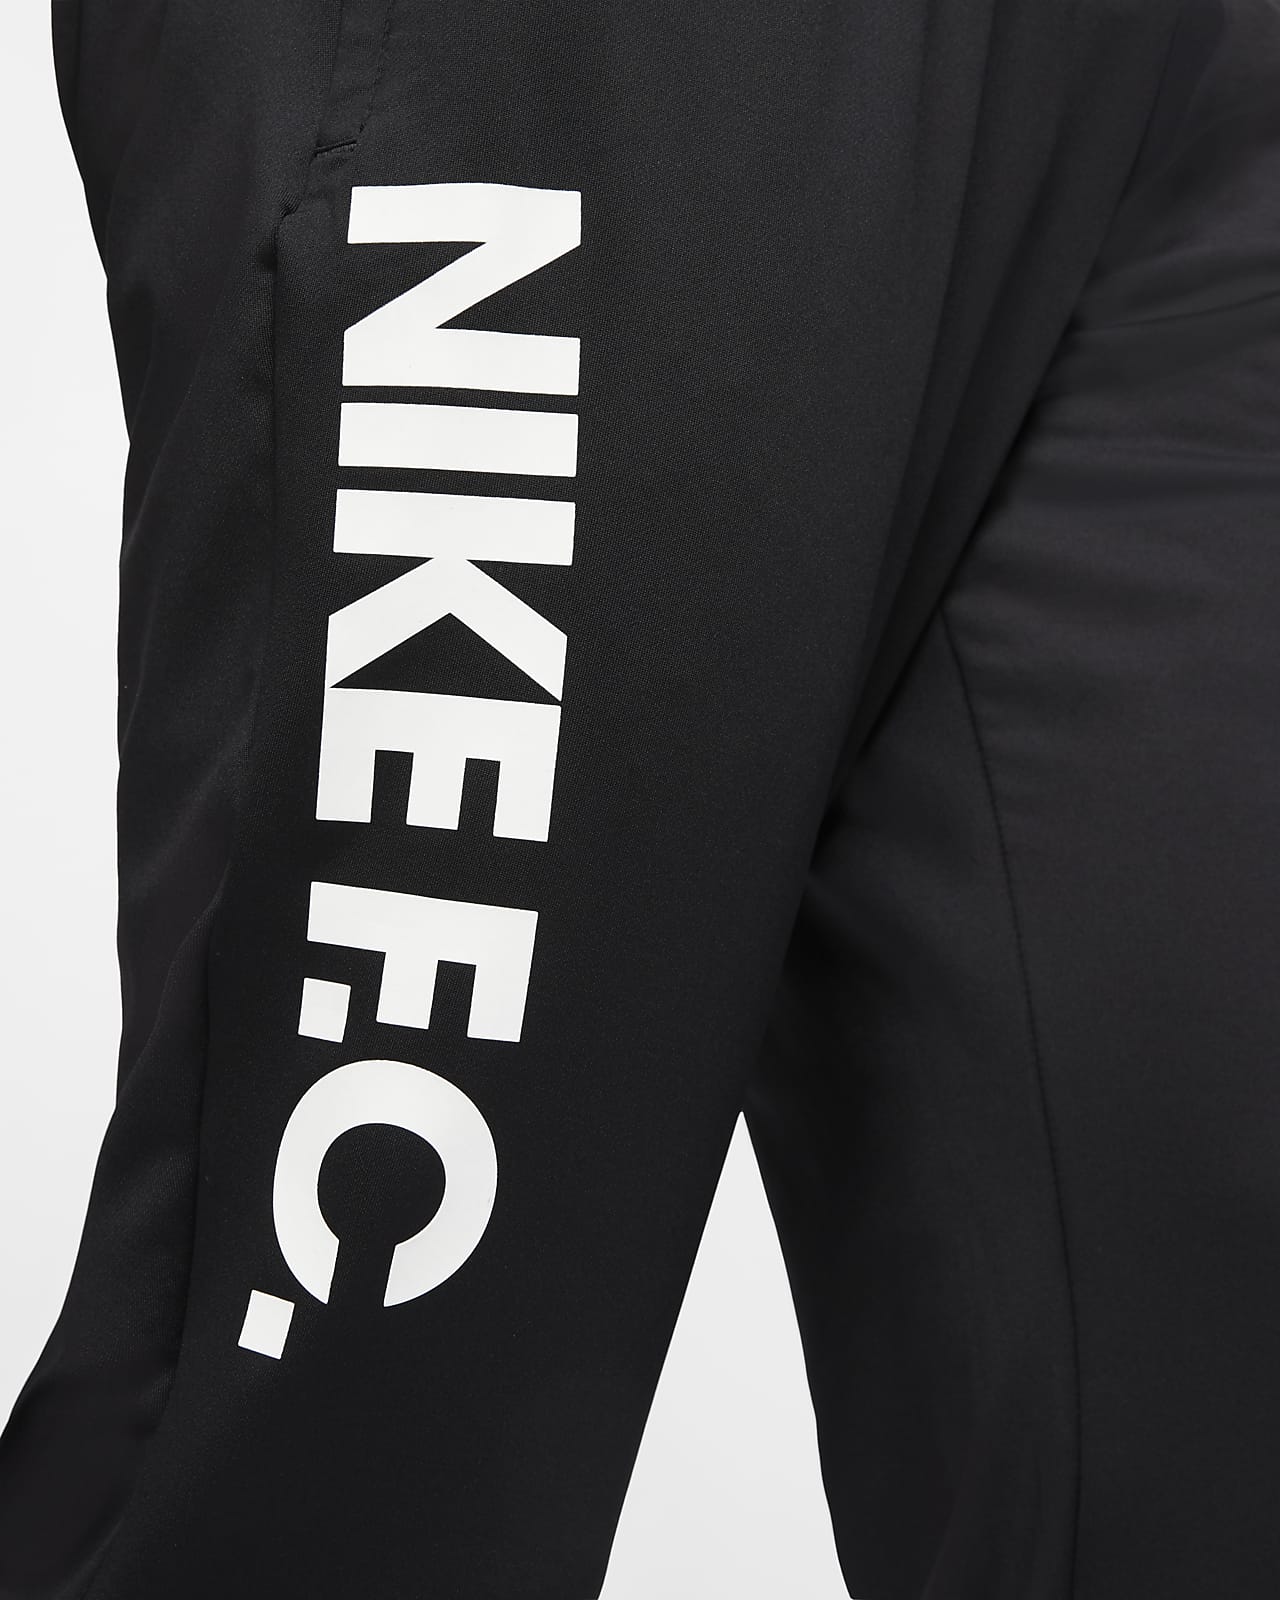 Nike Essential Men's Pants. Nike.com